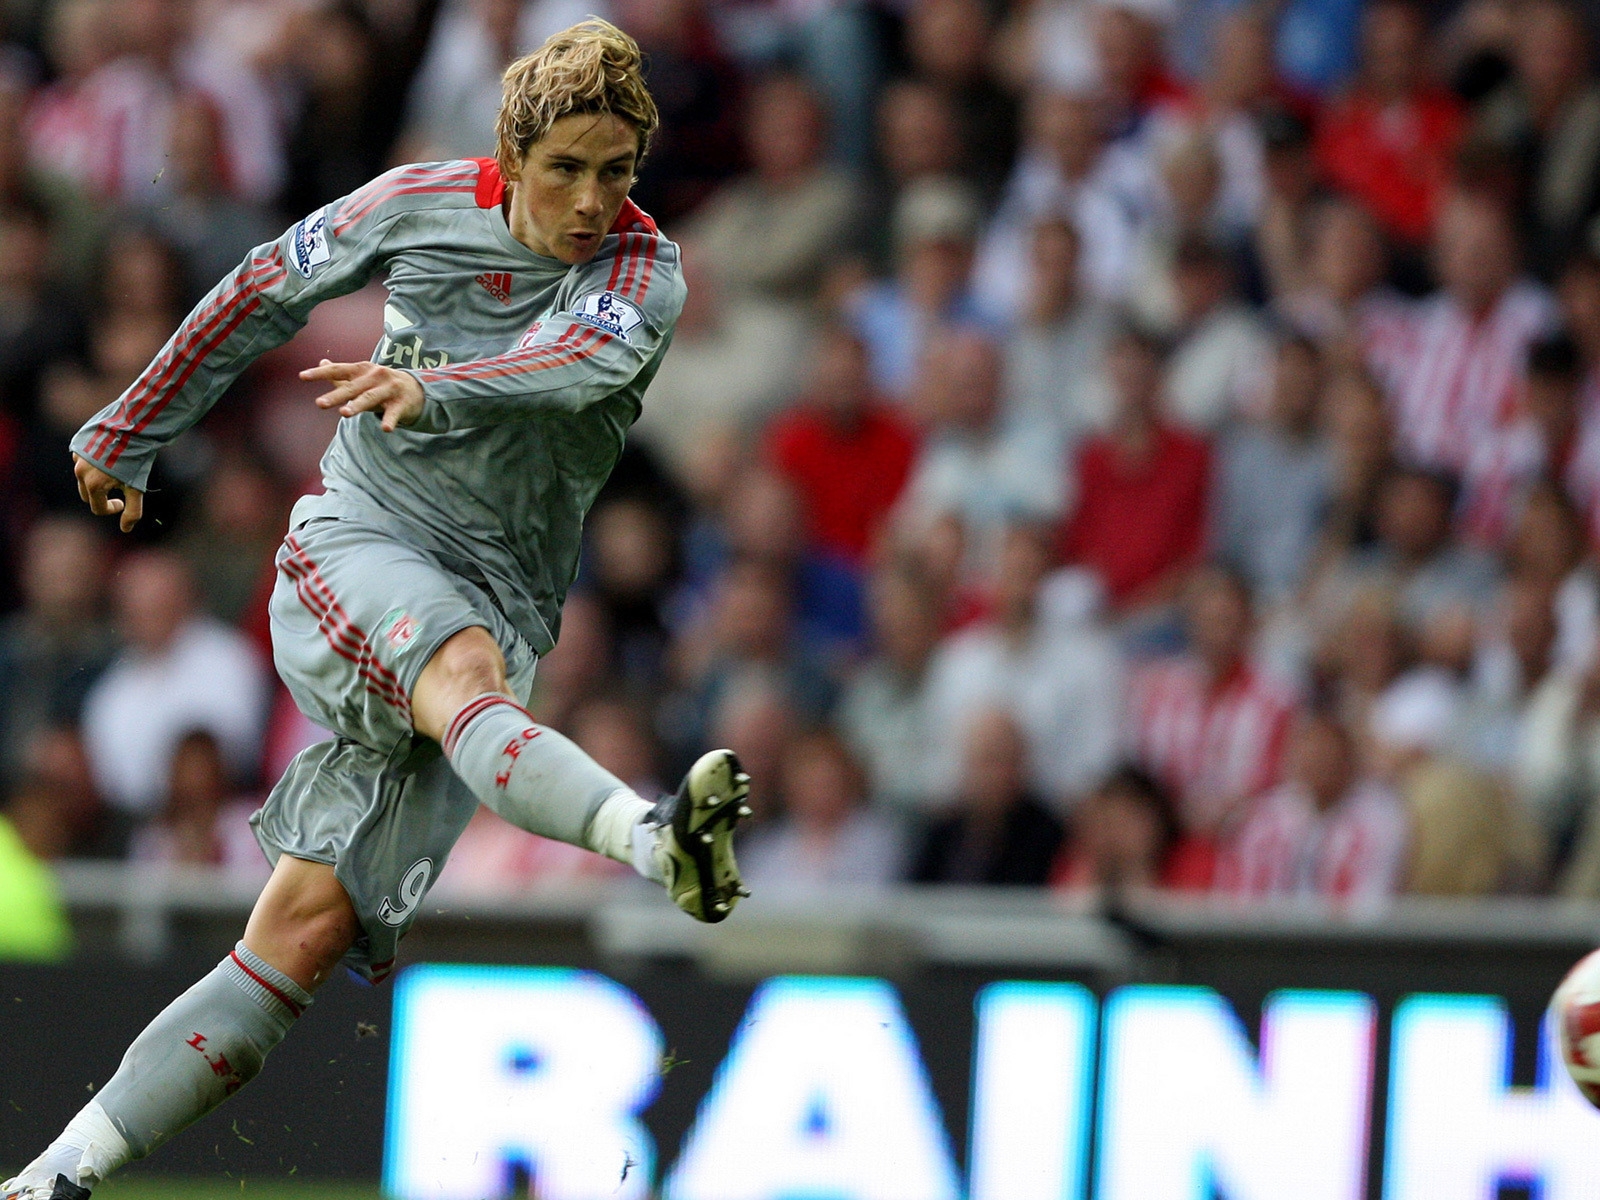 Fernando Torres Player for 1600 x 1200 resolution